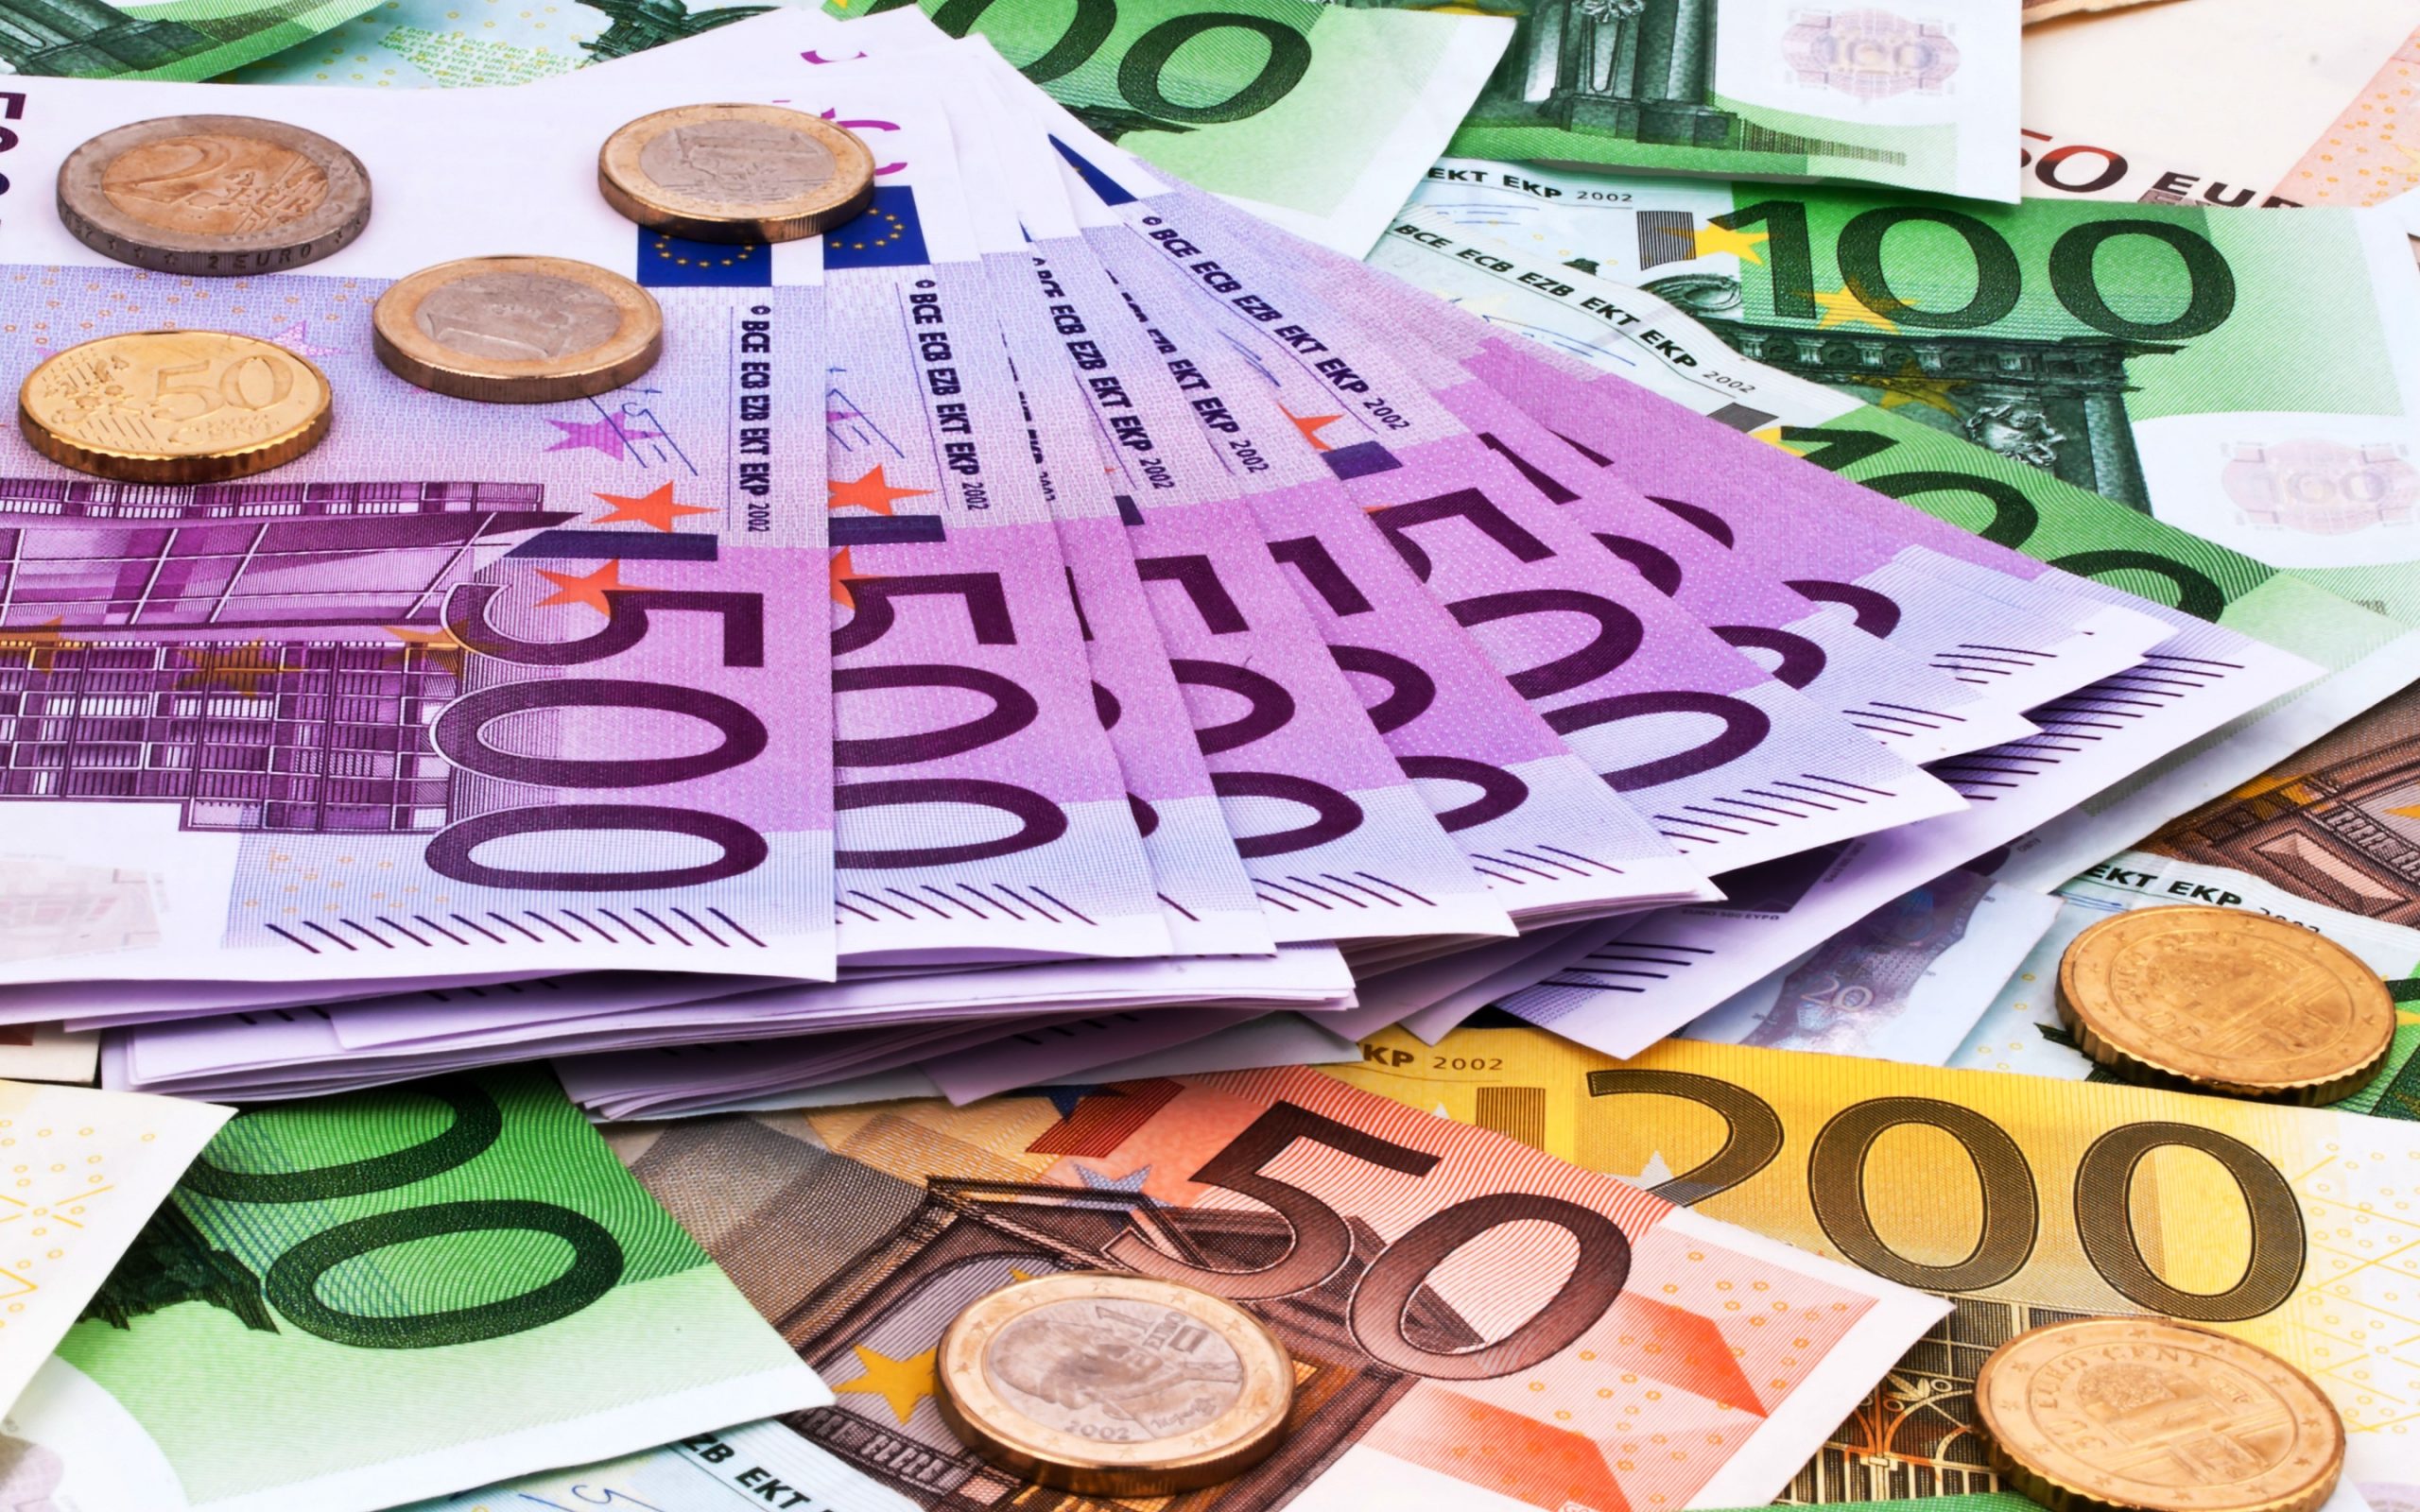 Euro banknot ve madeni paralar 21 yaşına